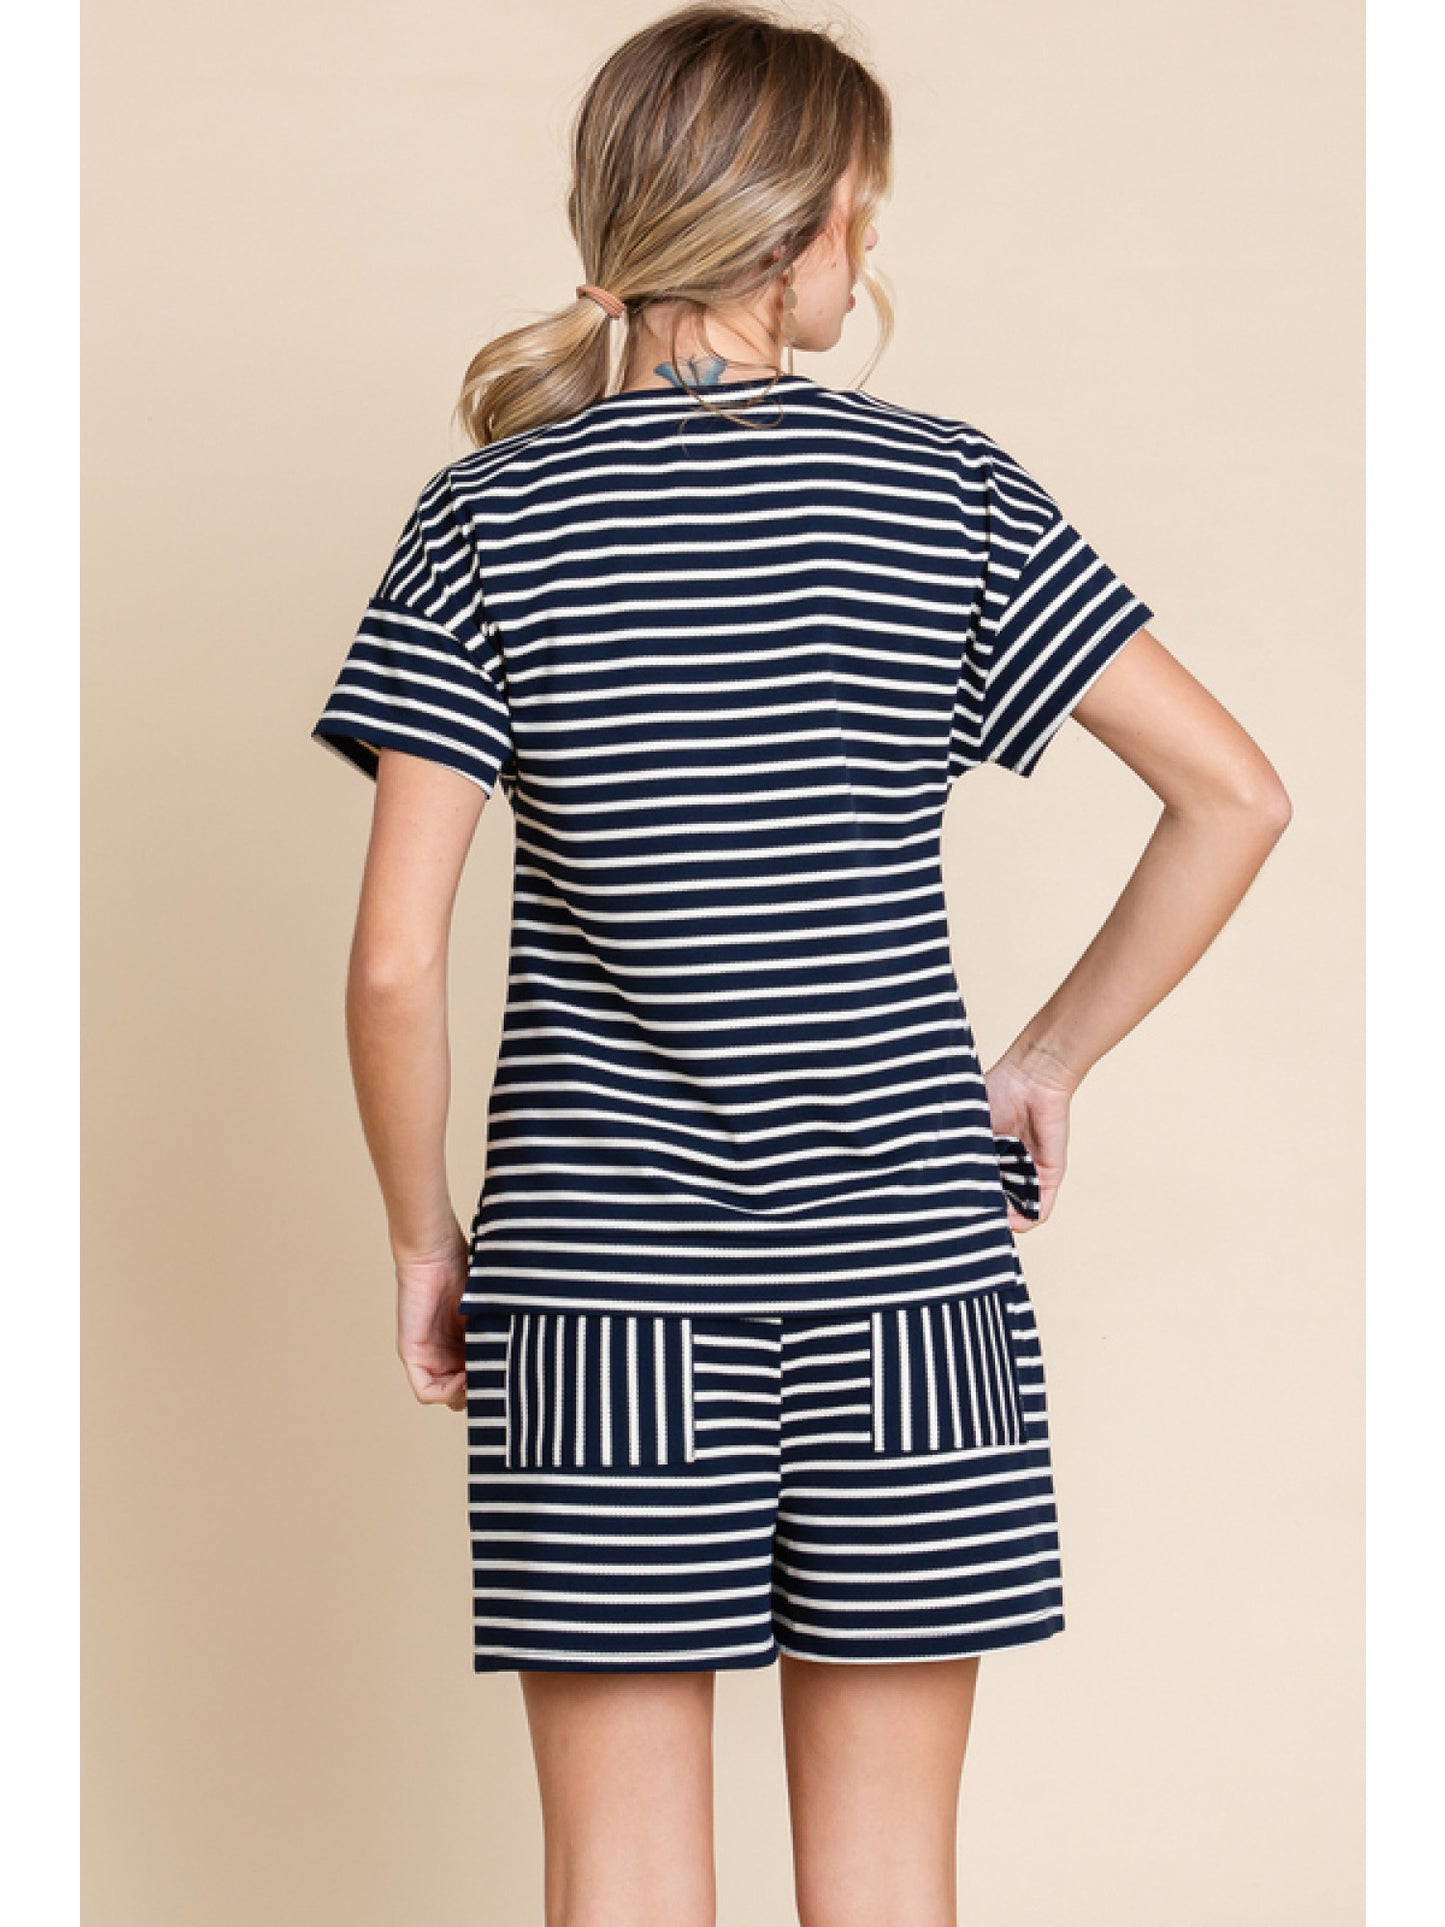 Striped loungewear sets-Short Sleeve top